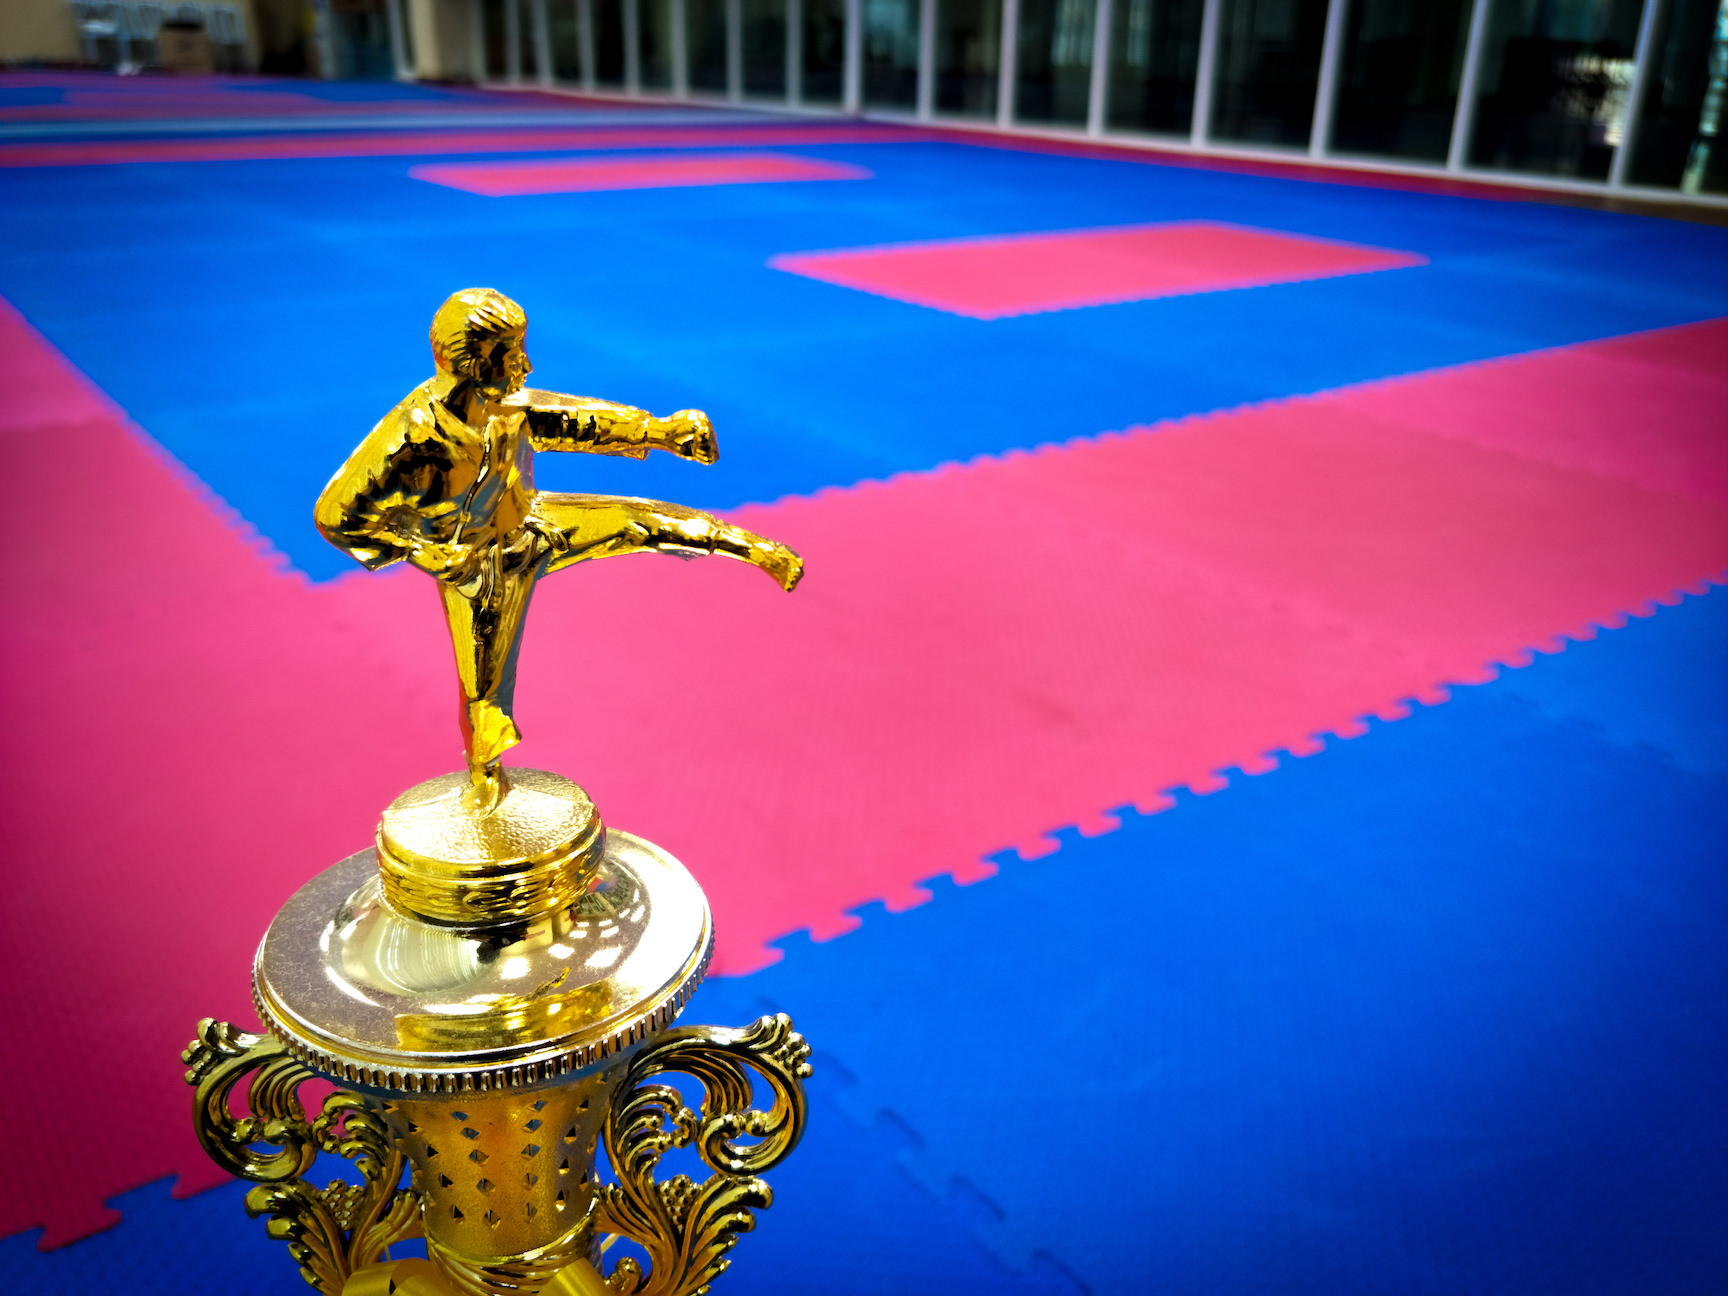 Competition and Karate - Seitou Ryu Karate